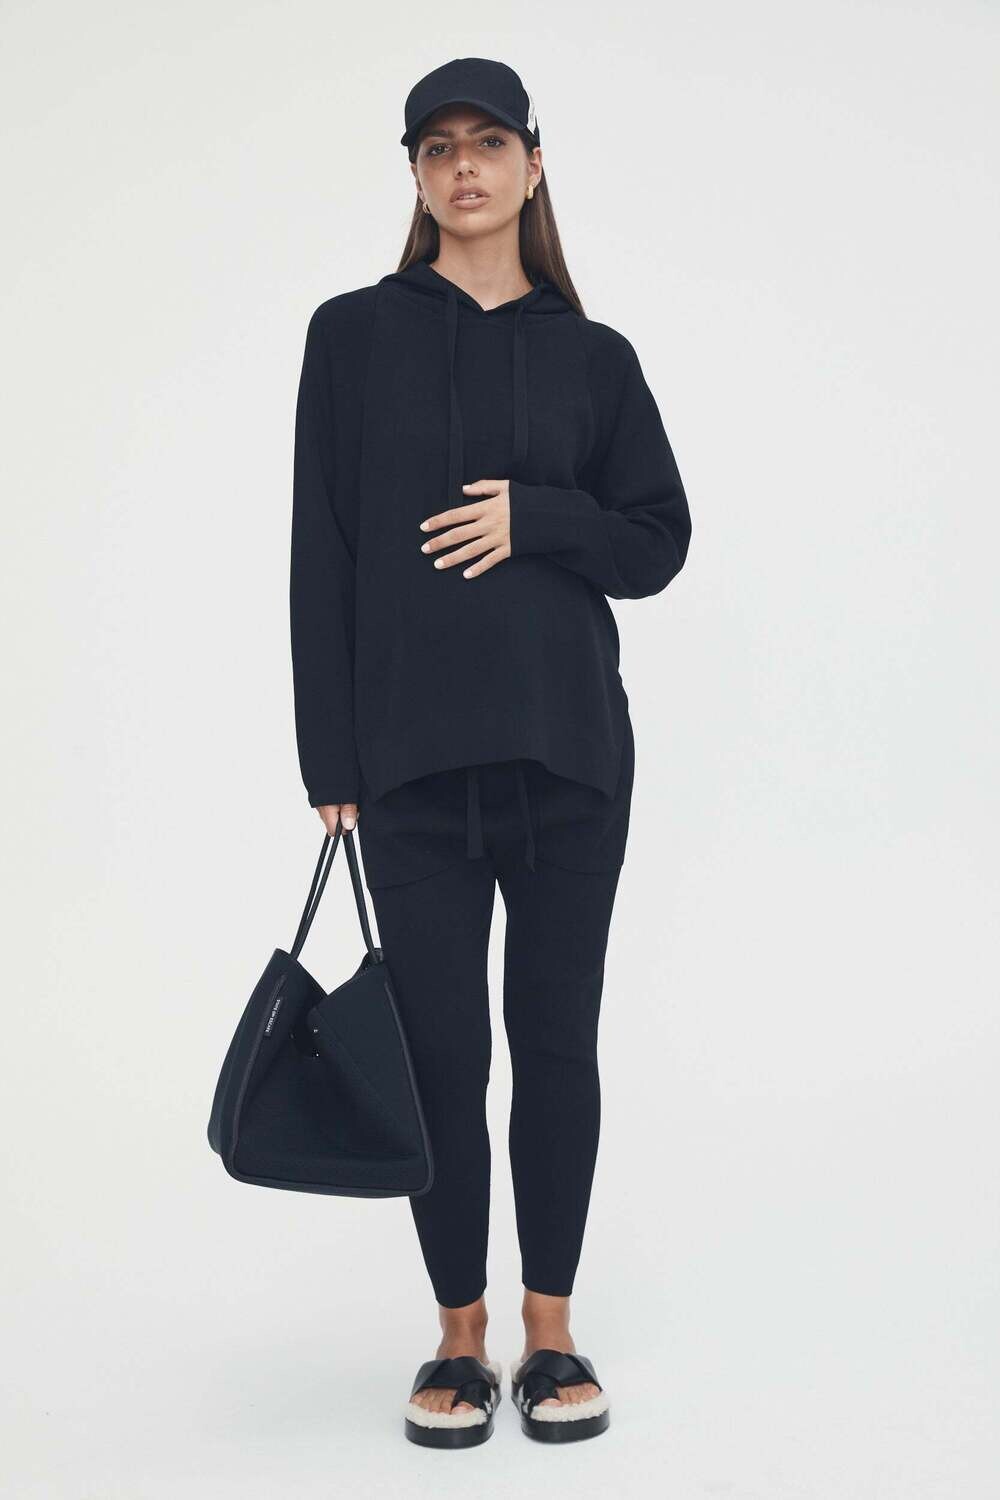 Crepe Knit Jogger, Color: Black, Size: 3